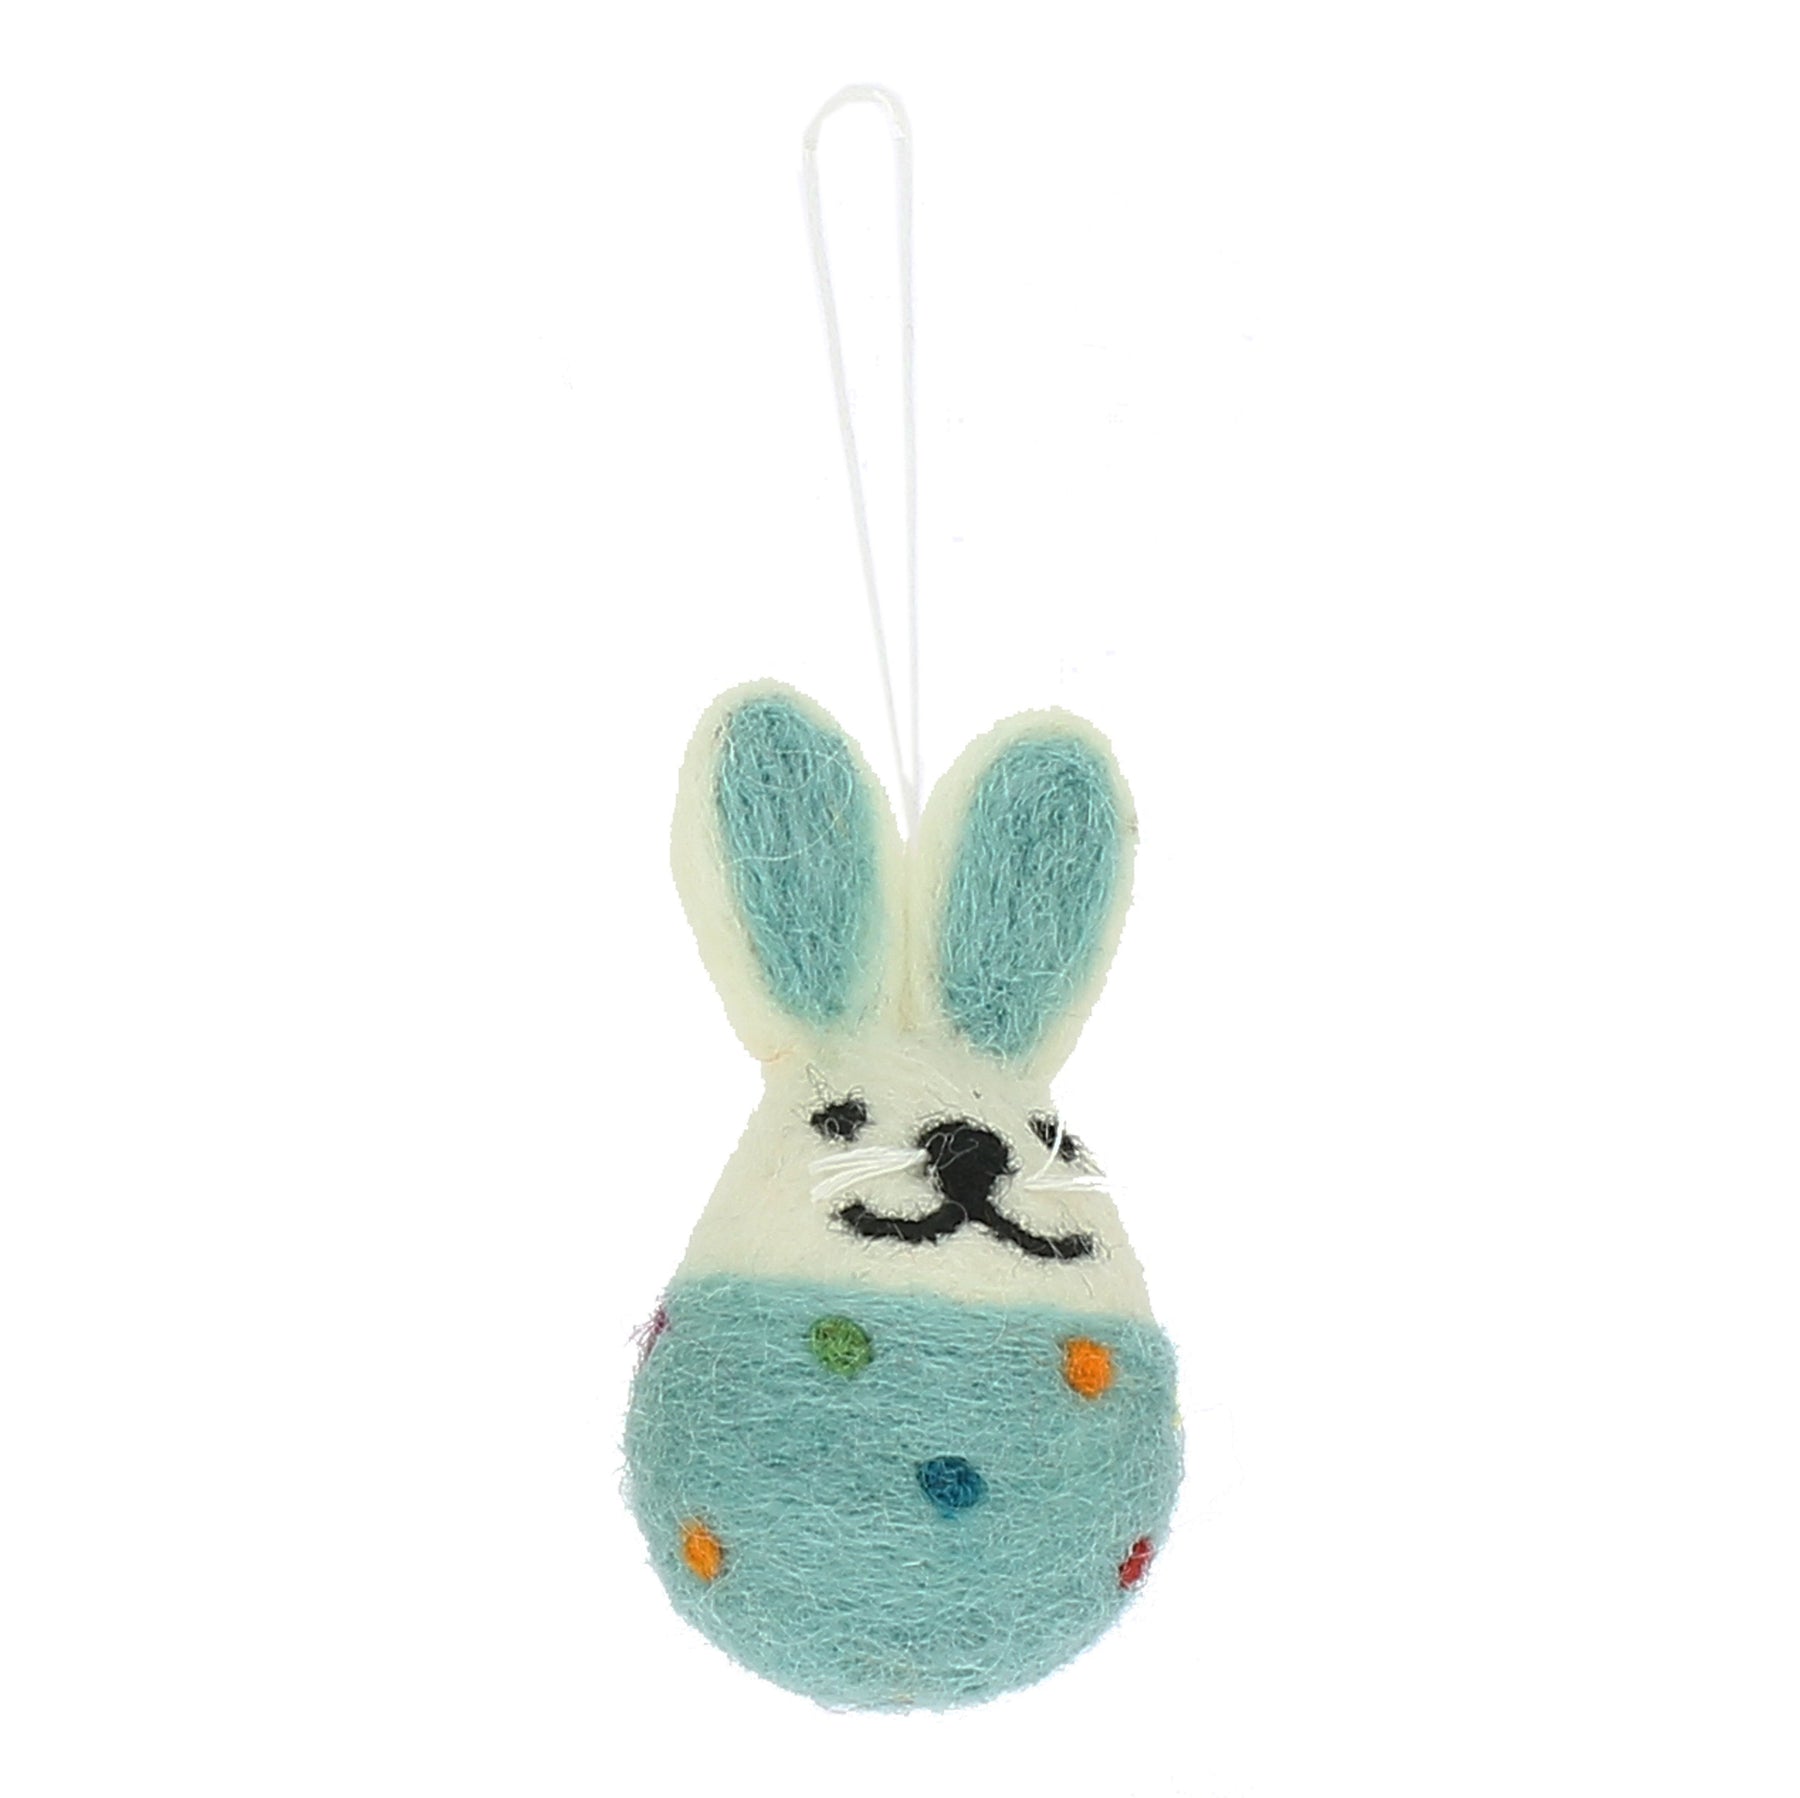 'Spotty Bunny' felt decorations by Fiona Walker England